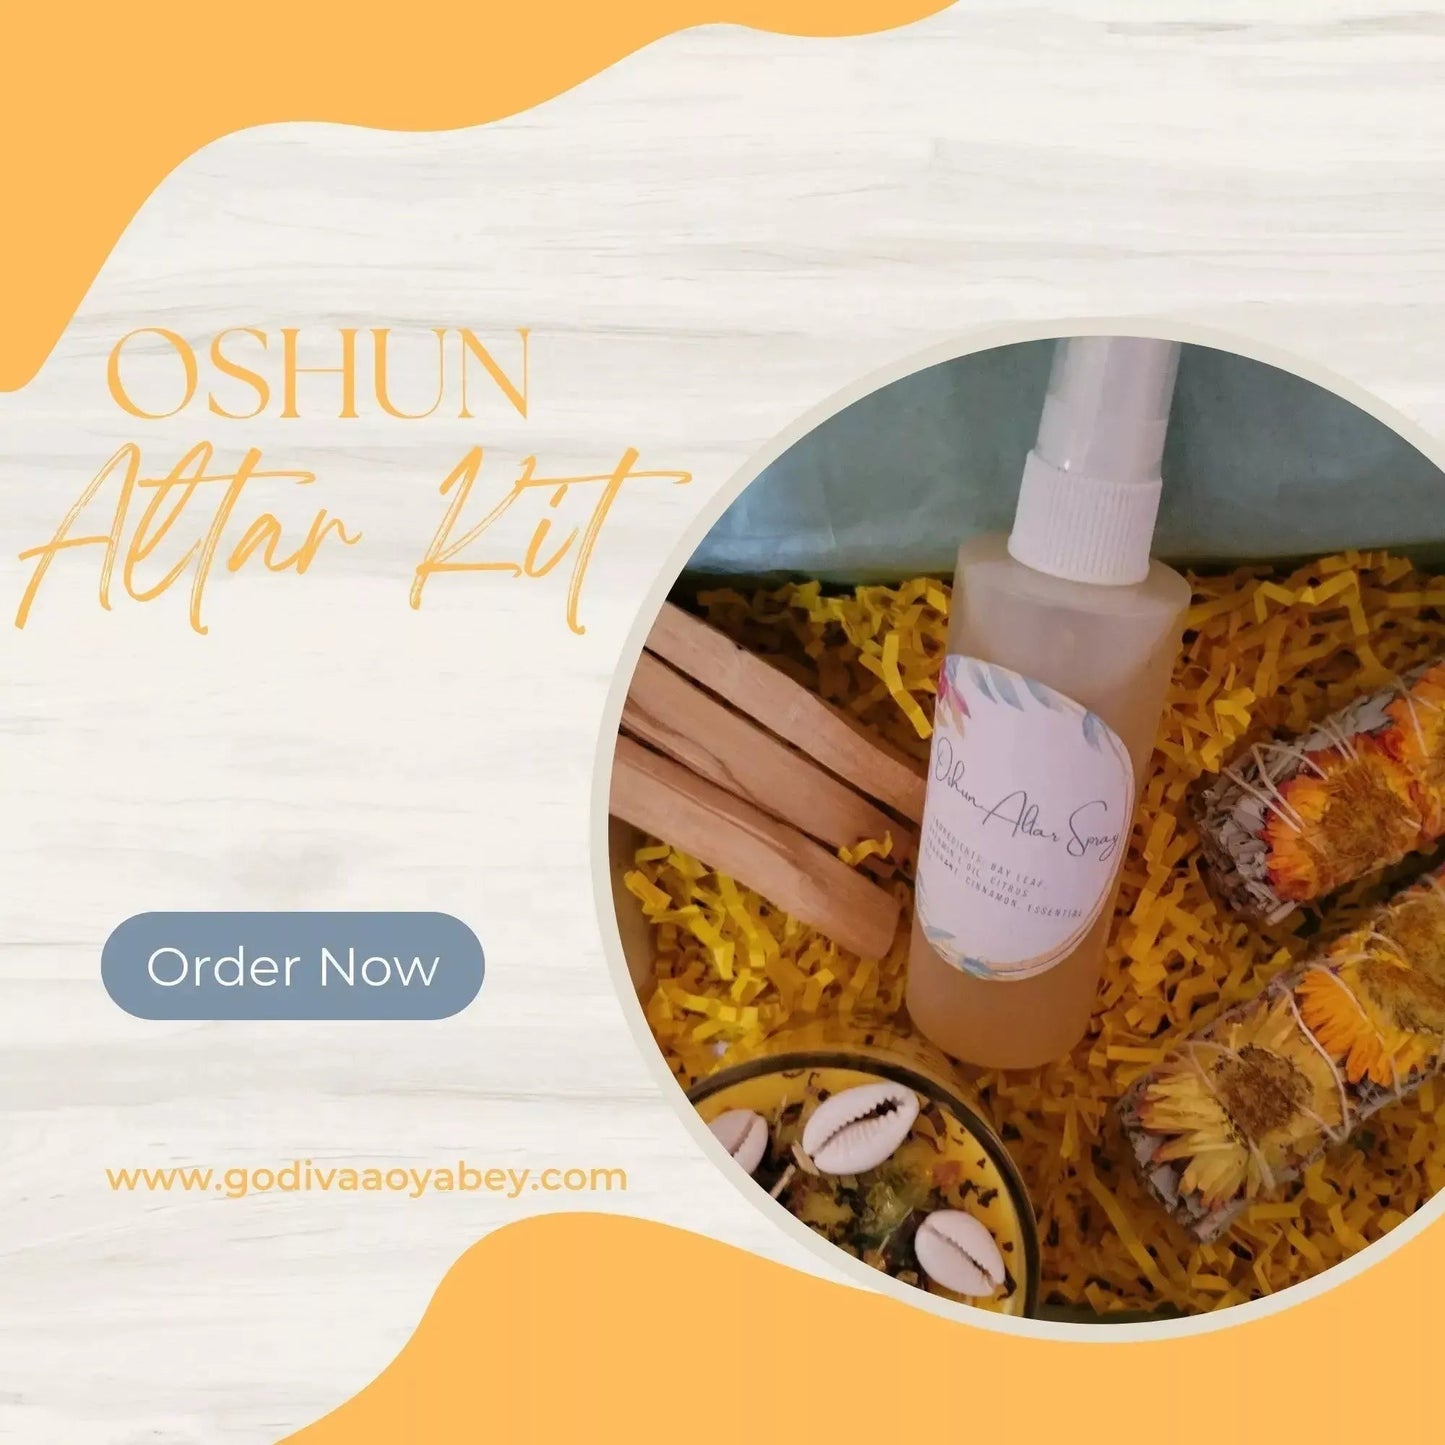 Oshun Altar Kit - Godiva Oya Bey